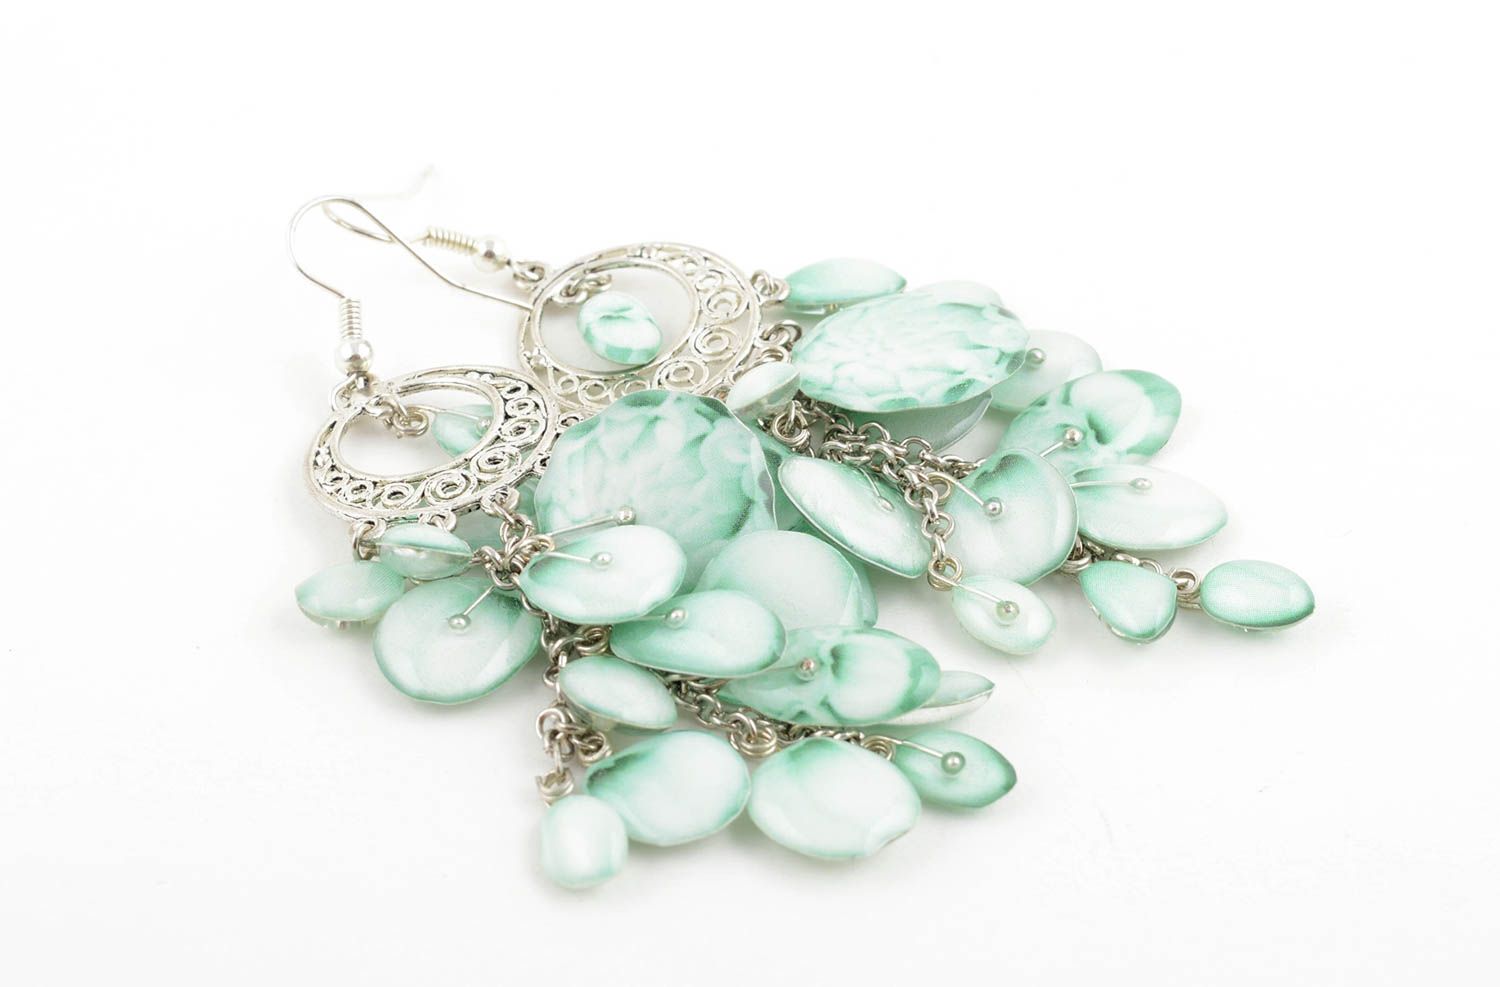 Metal jewelry handmade dangling earrings fashion accessories gifts for women photo 2